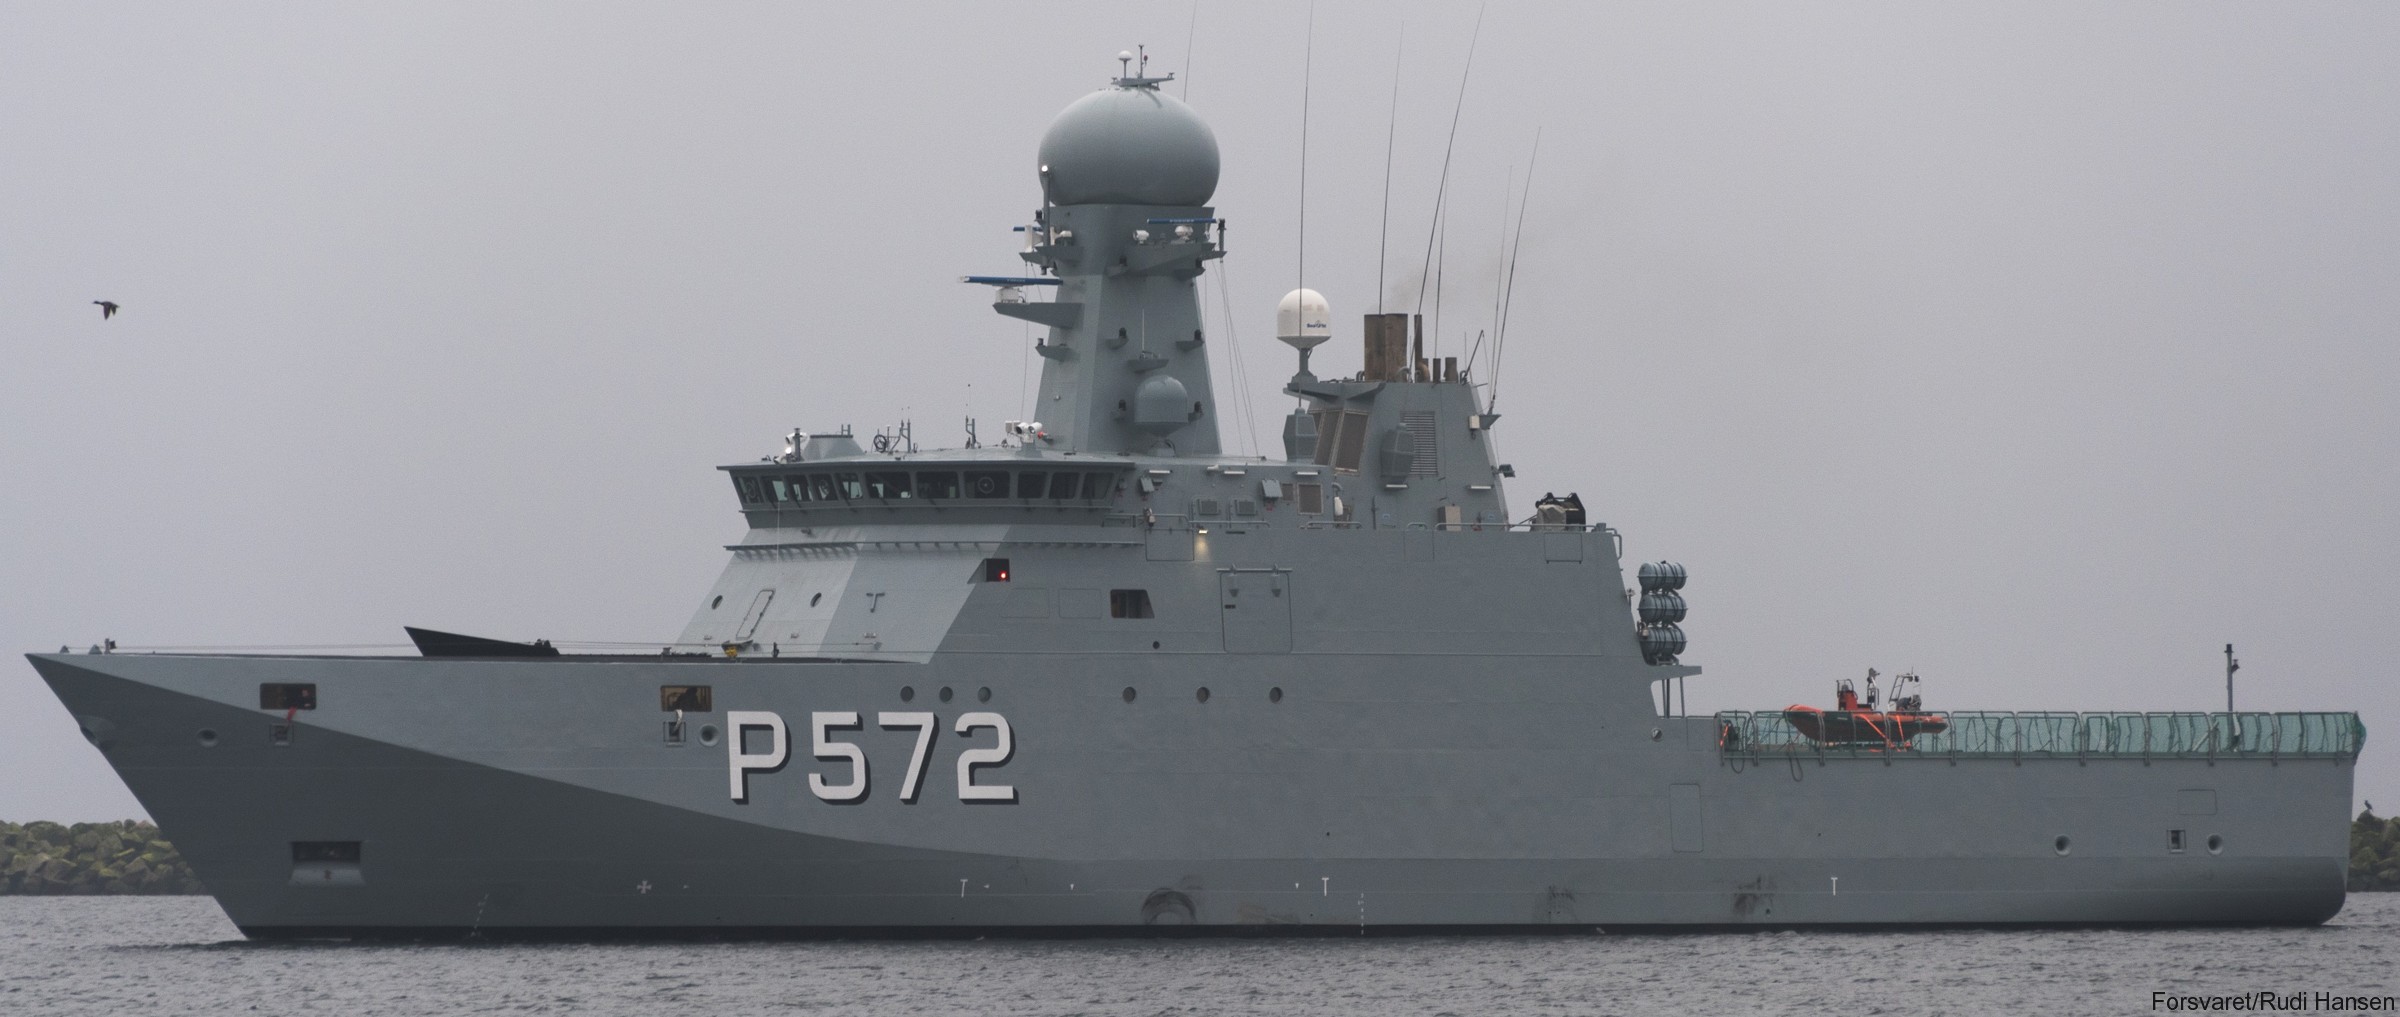 p-572 hdms lauge koch knud rasmussen class offshore patrol vessel royal danish navy inspektionsfartøj 07